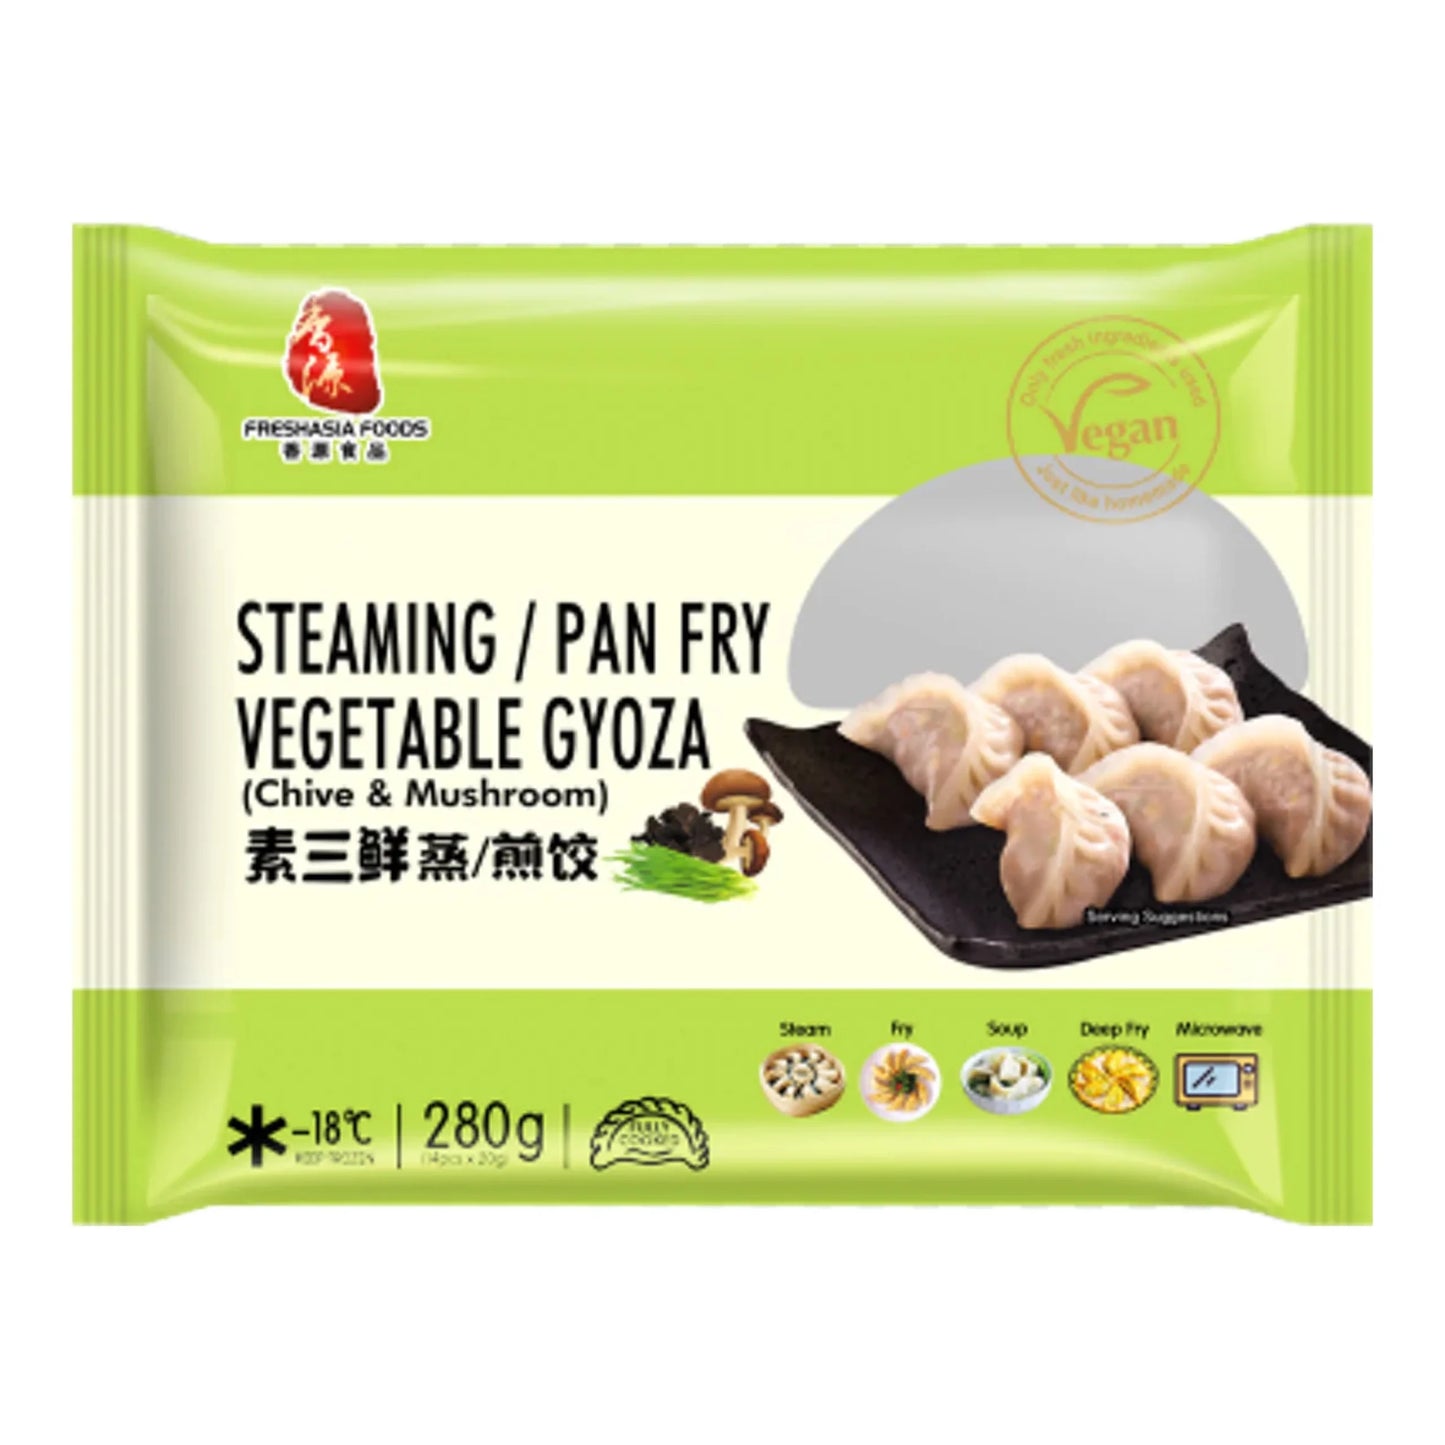 FRESHASIA Steaming / Pan Fry Vegetable Gyoza (Chive & Mushroom) 香源素三鲜蒸/煎饺 Sui cao rau he va nam 280g x 1